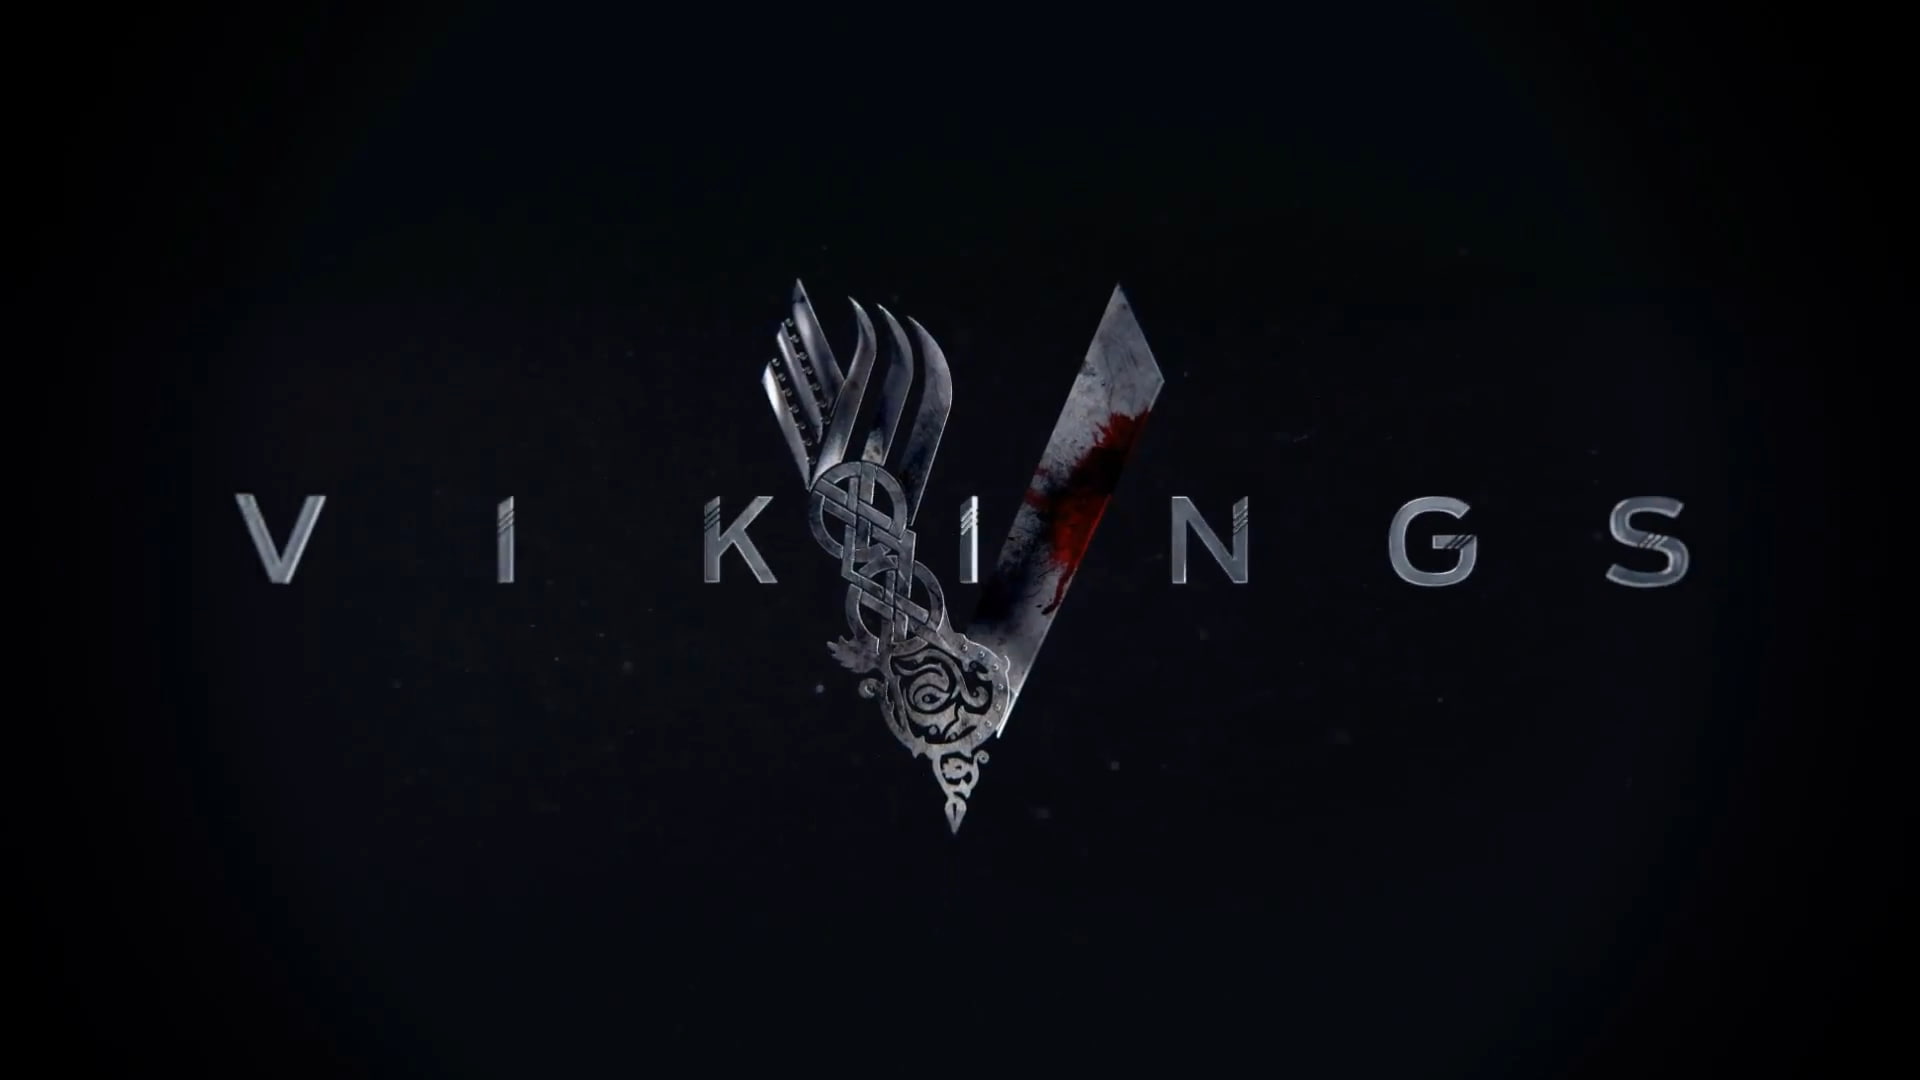 Vikings, Vikings (TV series), logo, black background, studio shot